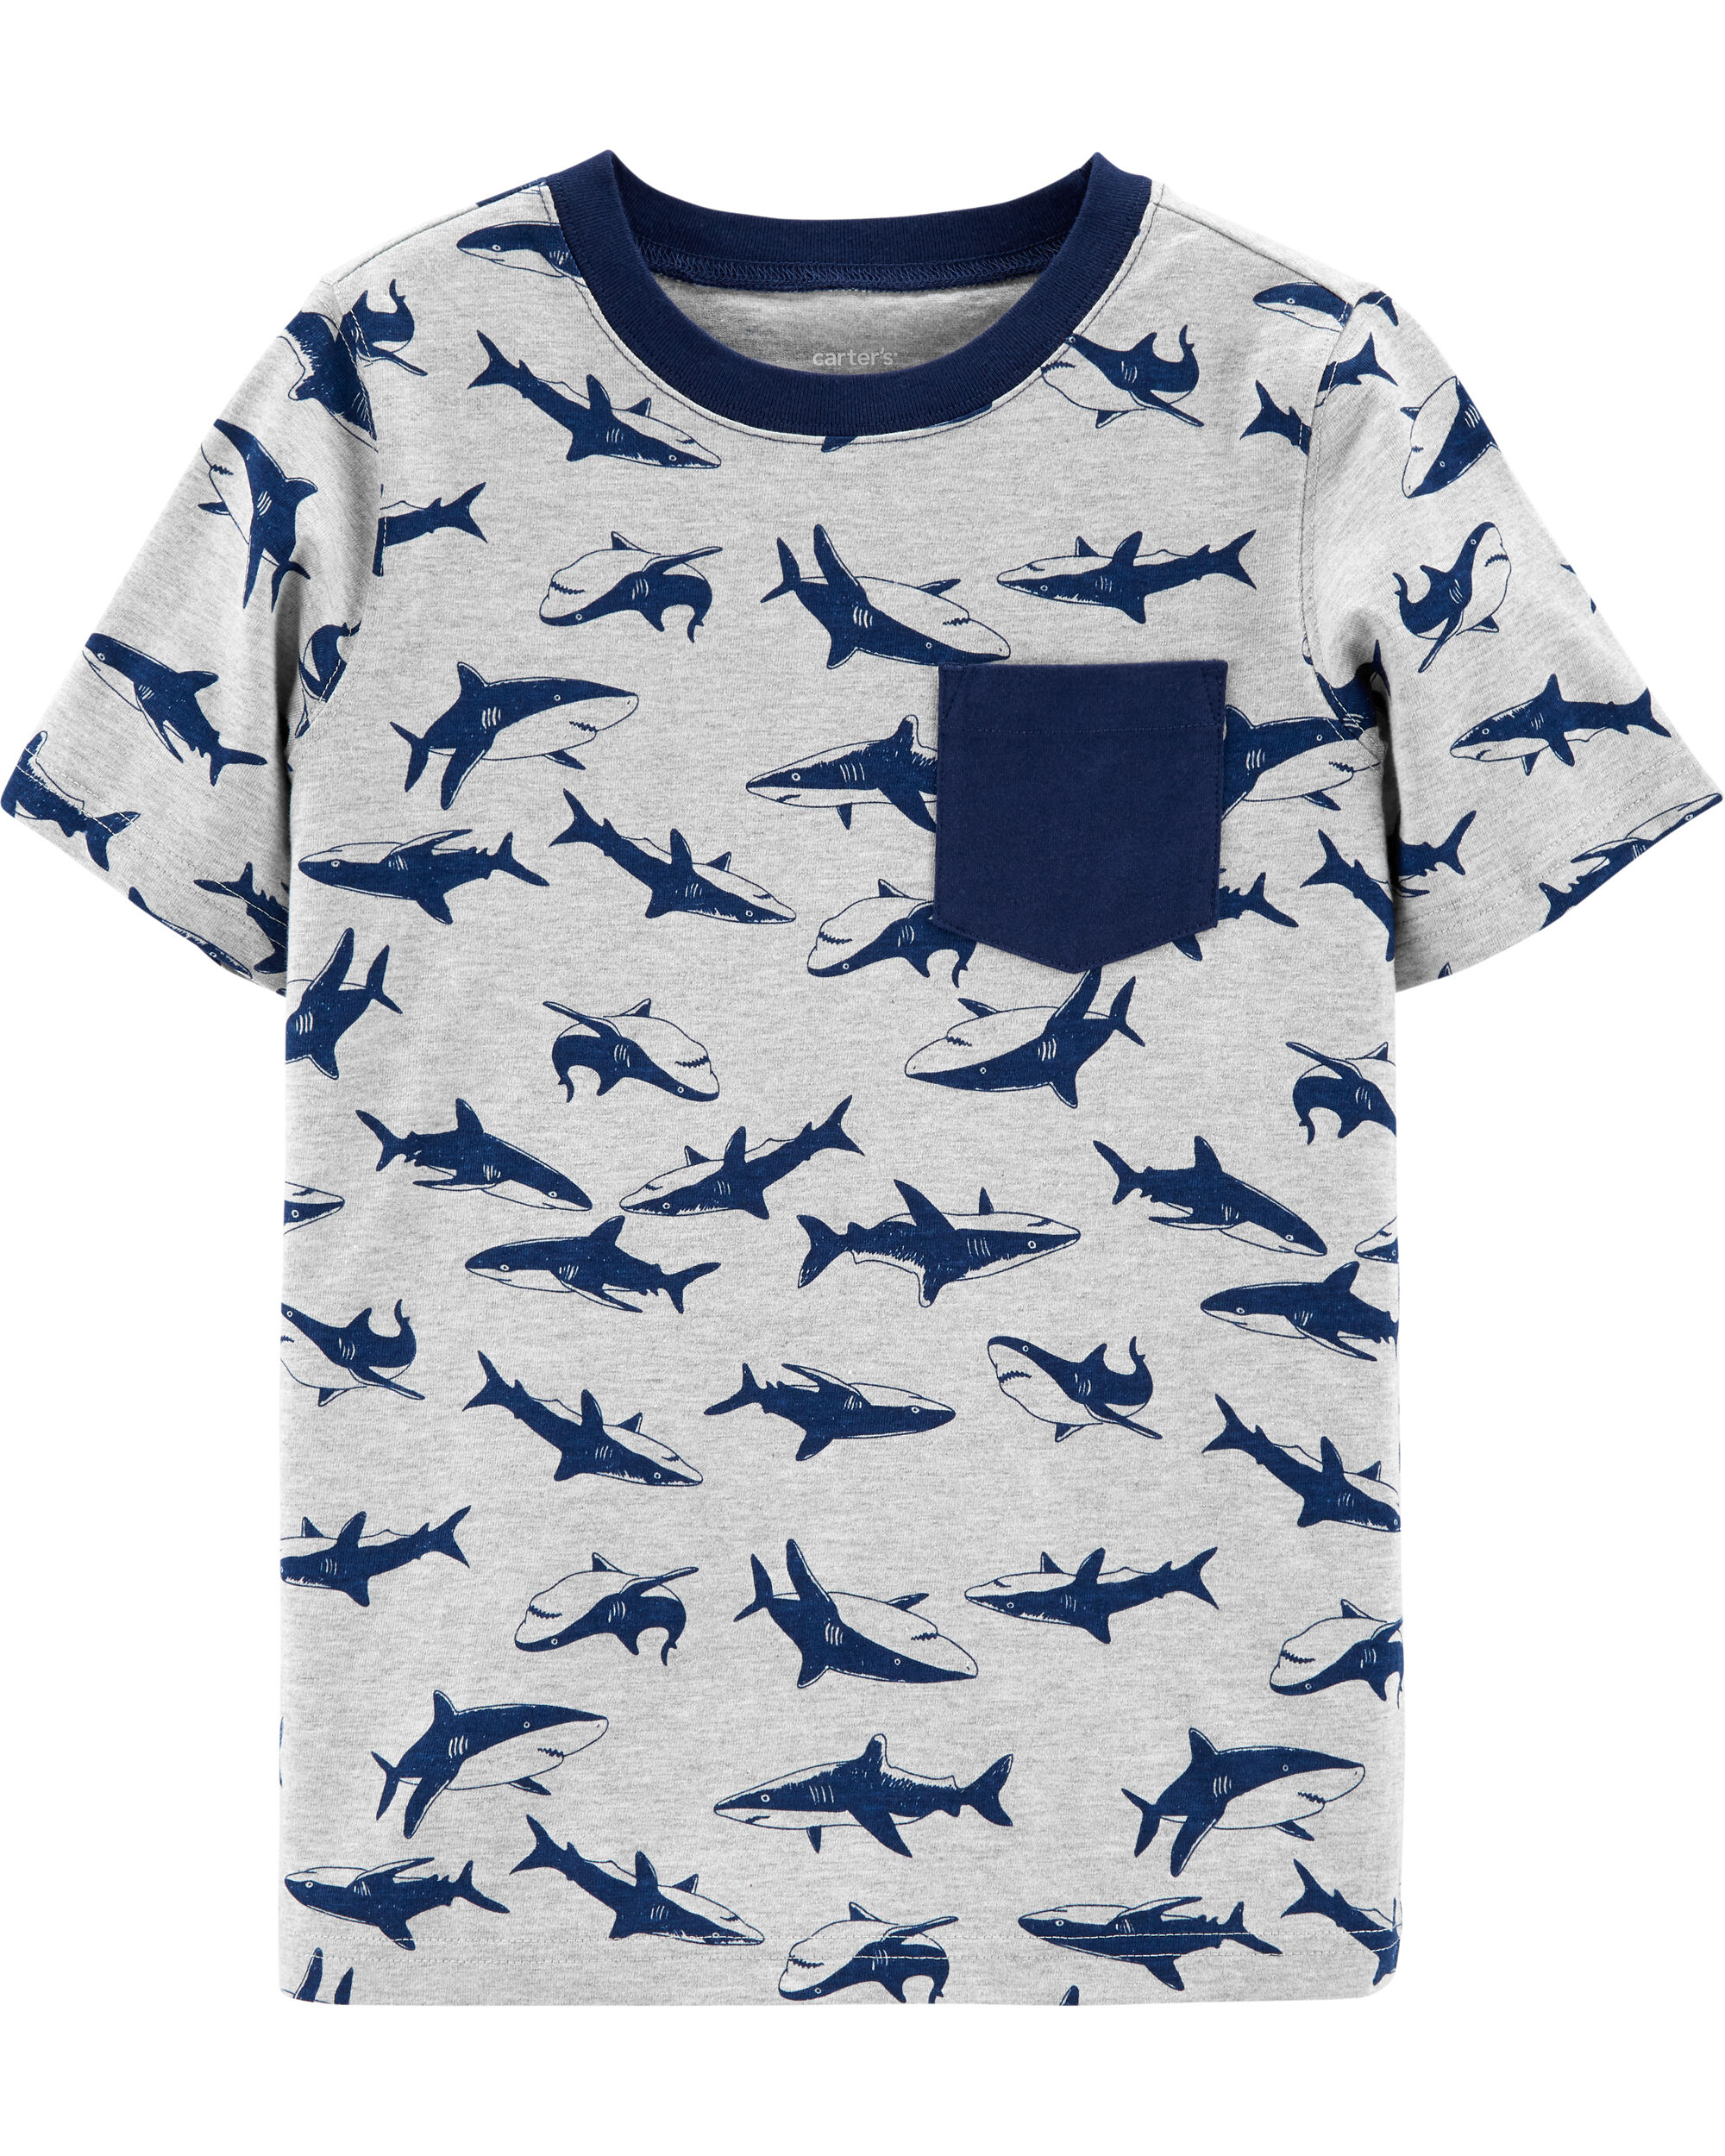 Shark Pocket Jersey Tee | carters.com